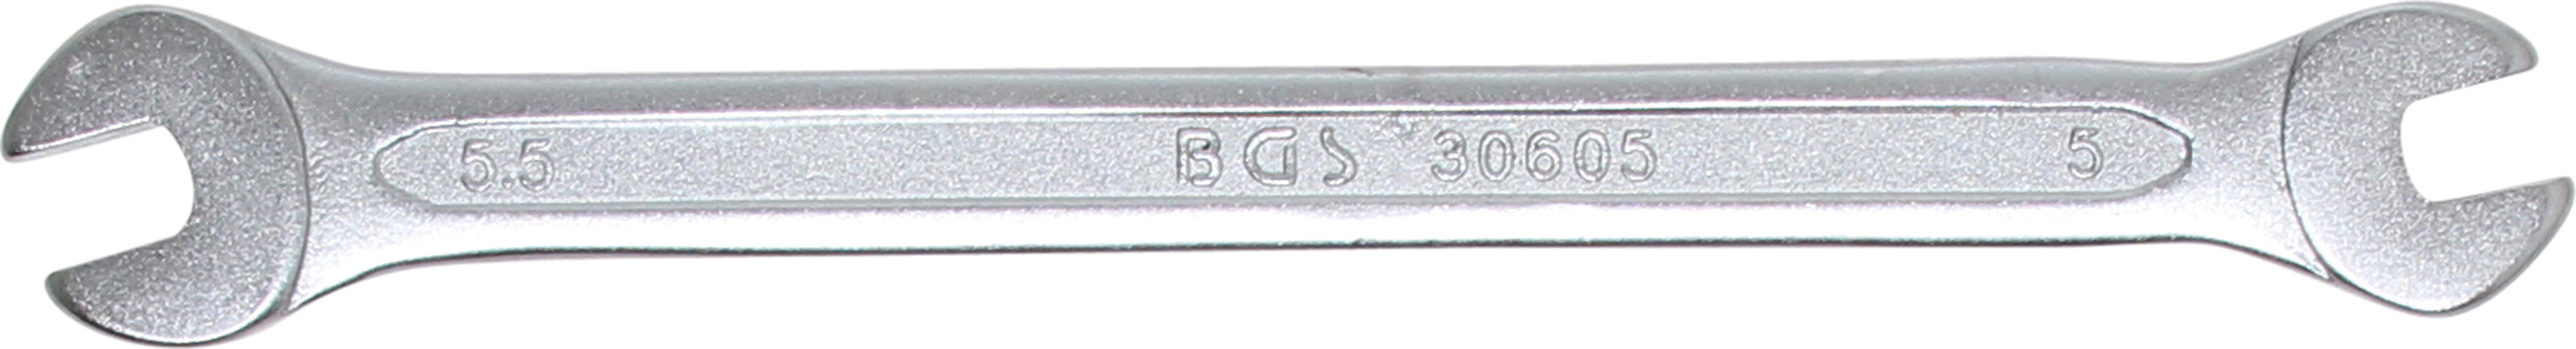 BGS 30605 Cheie fixa 5x5.5 mm